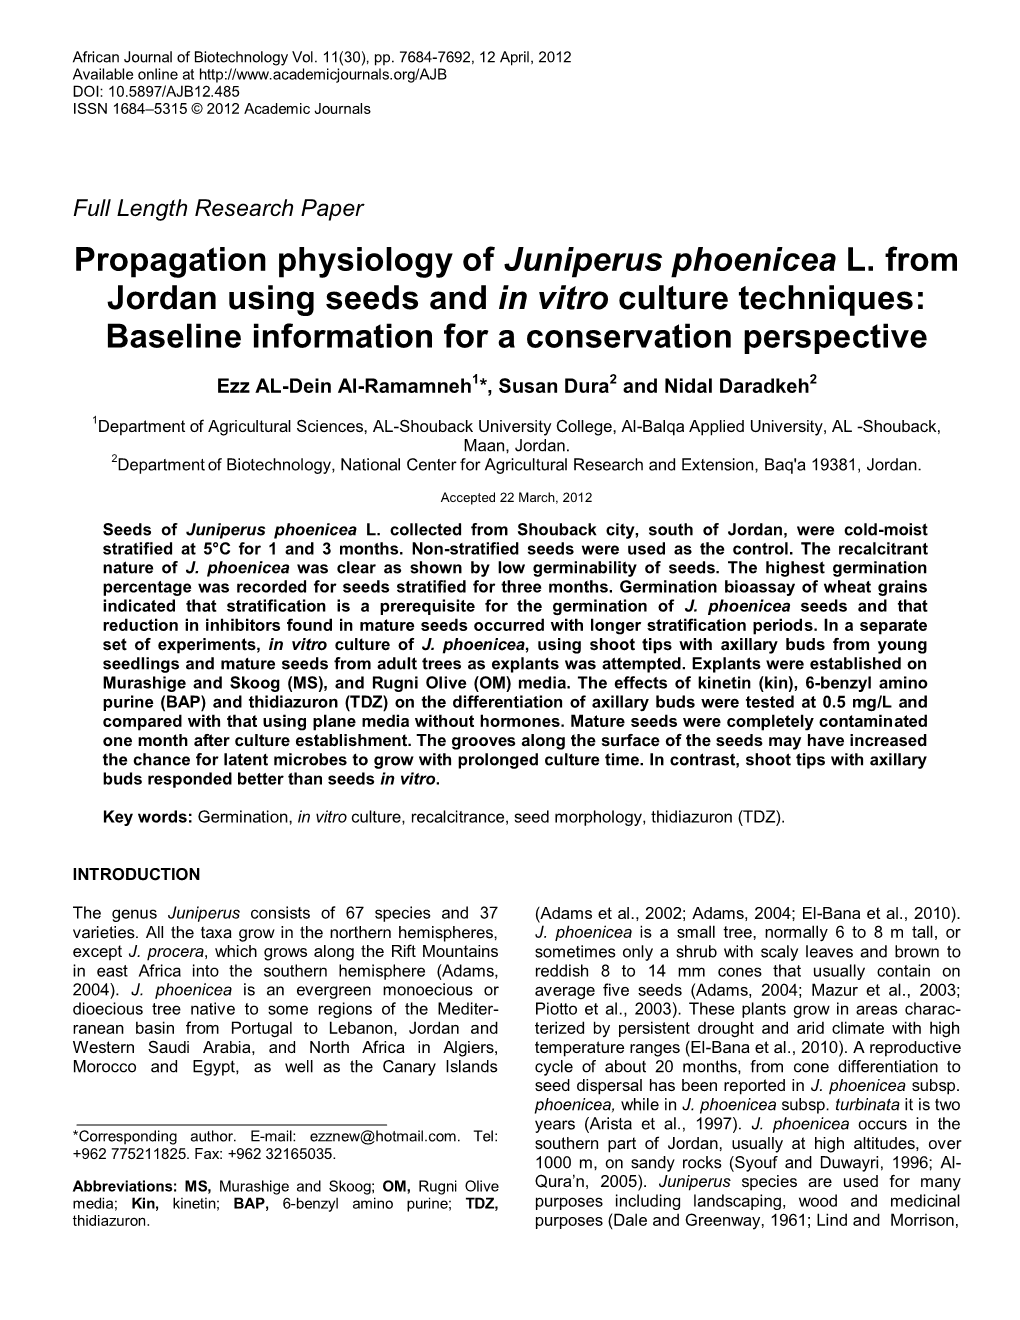 Propagation Physiology of Juniperus Phoenicea L